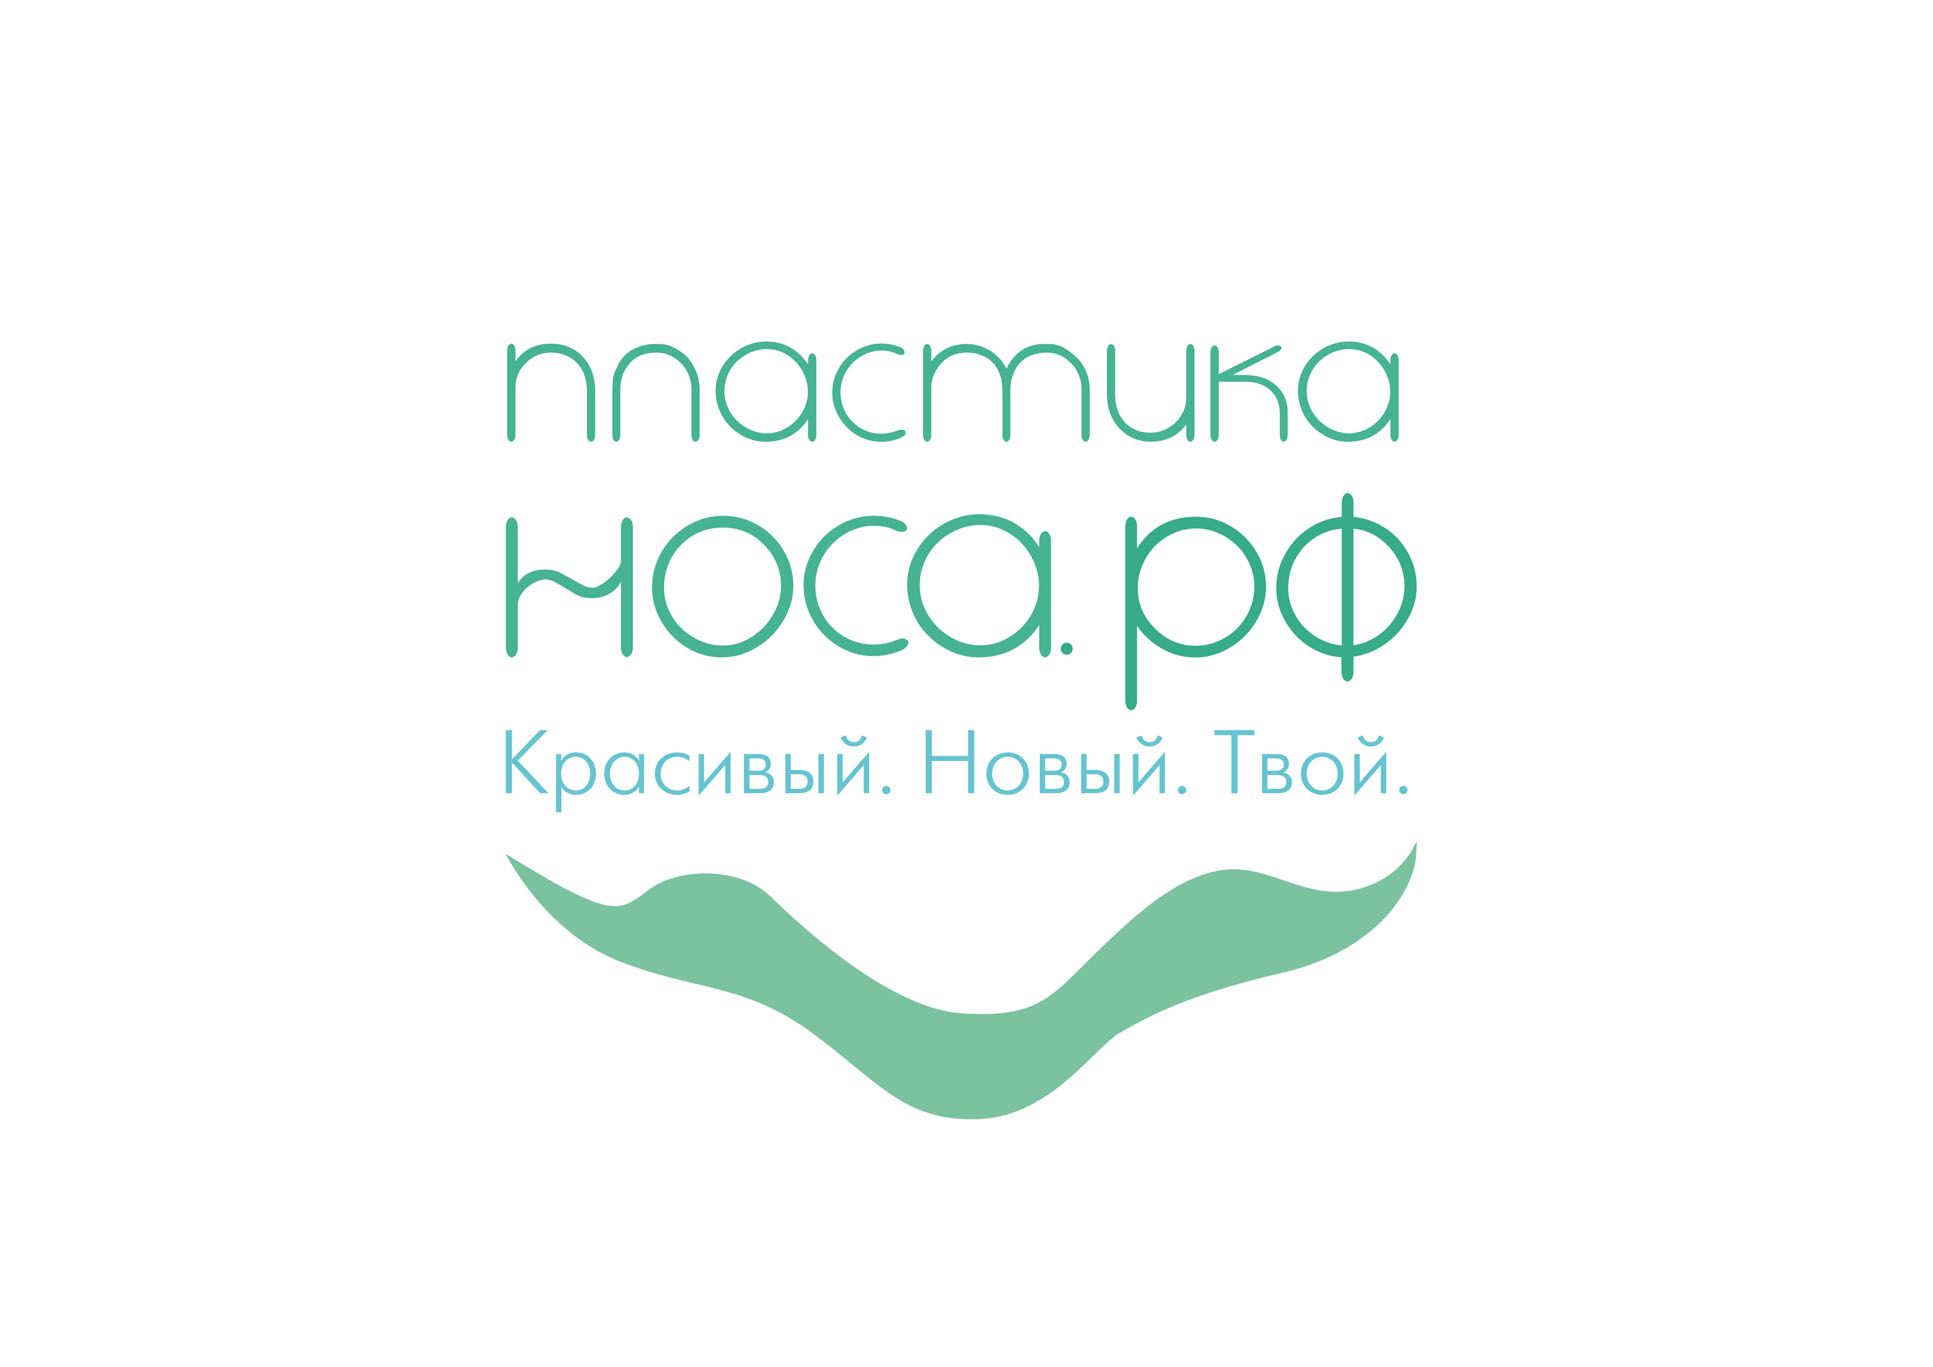 Логотип ПластикаНоса.рф - дизайнер Sonya___